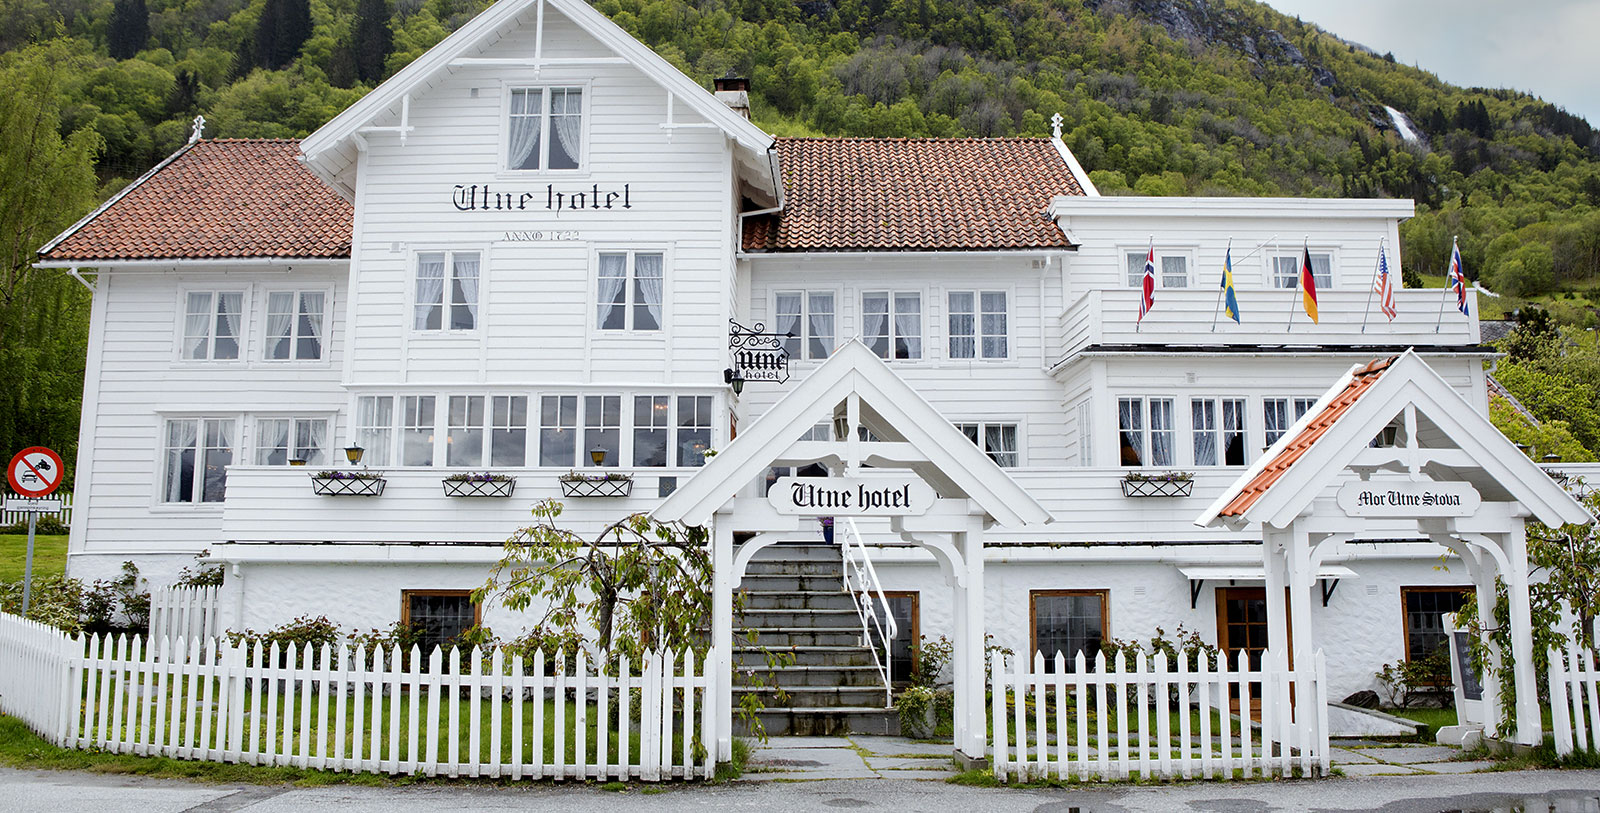 Image of Hotel Exterior Utne Hotel, 1722, Member of Historic Hotels Worldwide, in Utne, Norway, Overview